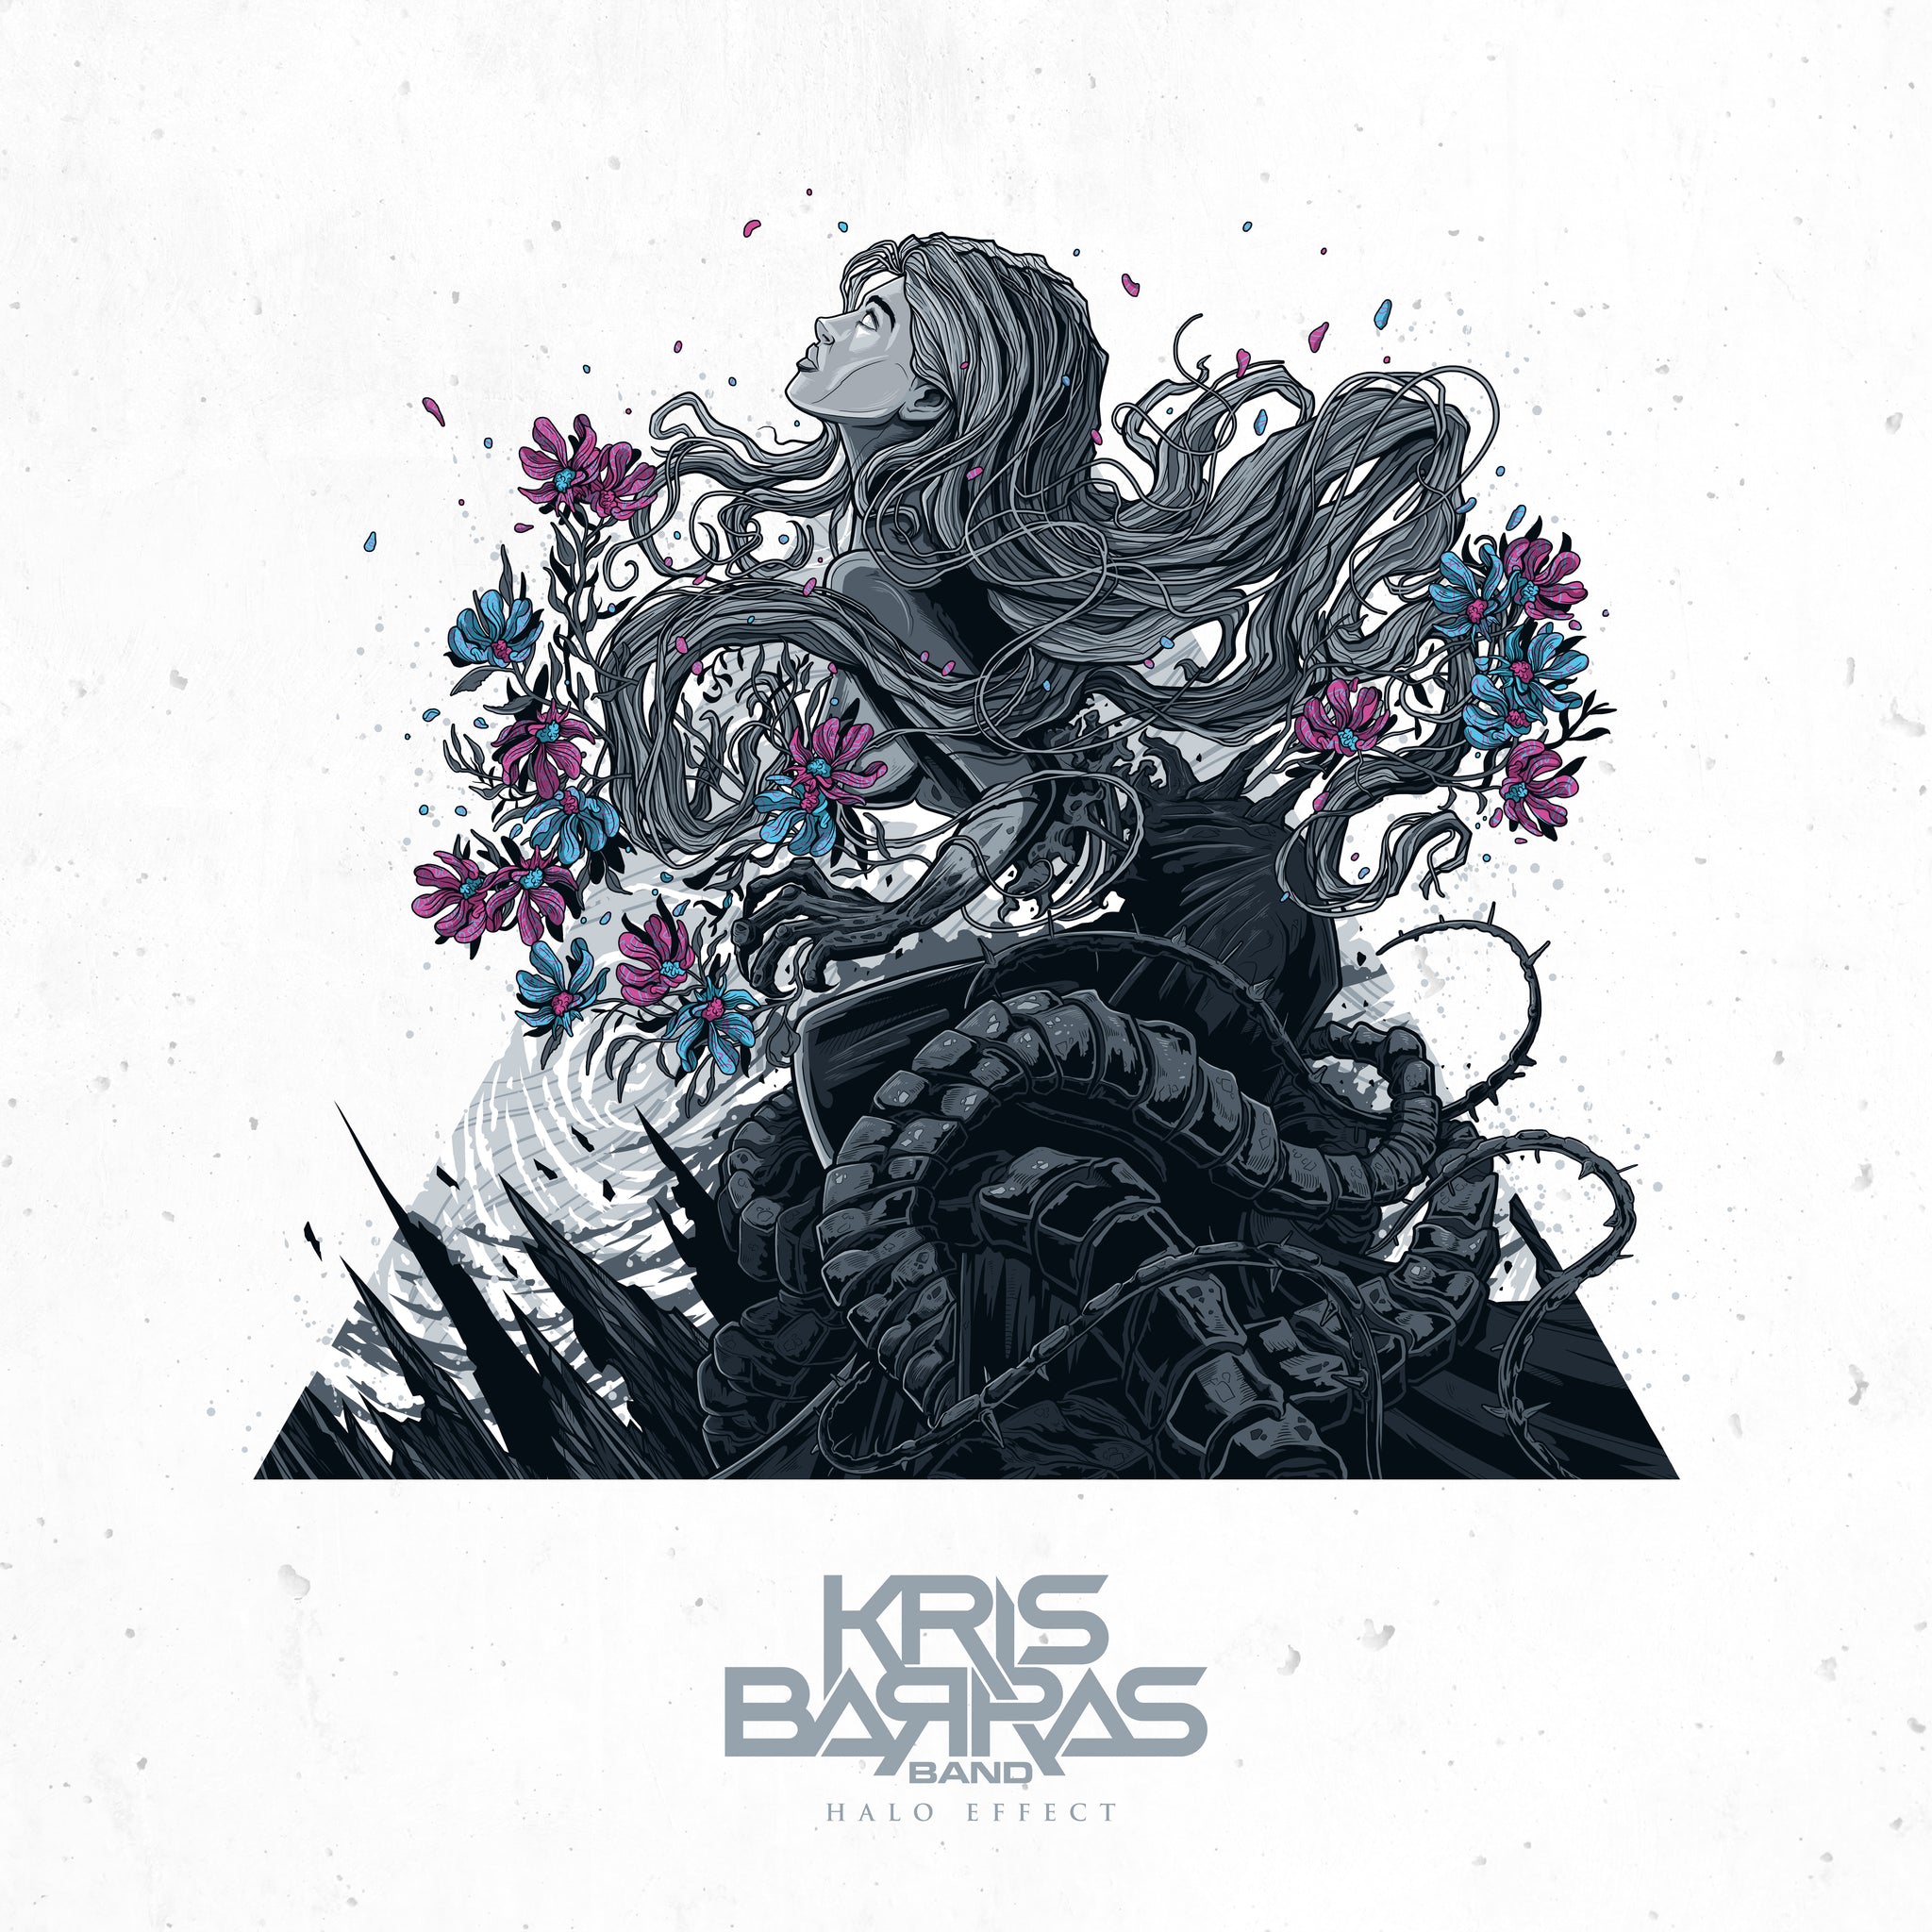 Kris Barras Band "Halo Effect" Digital Download - PRE-ORDER